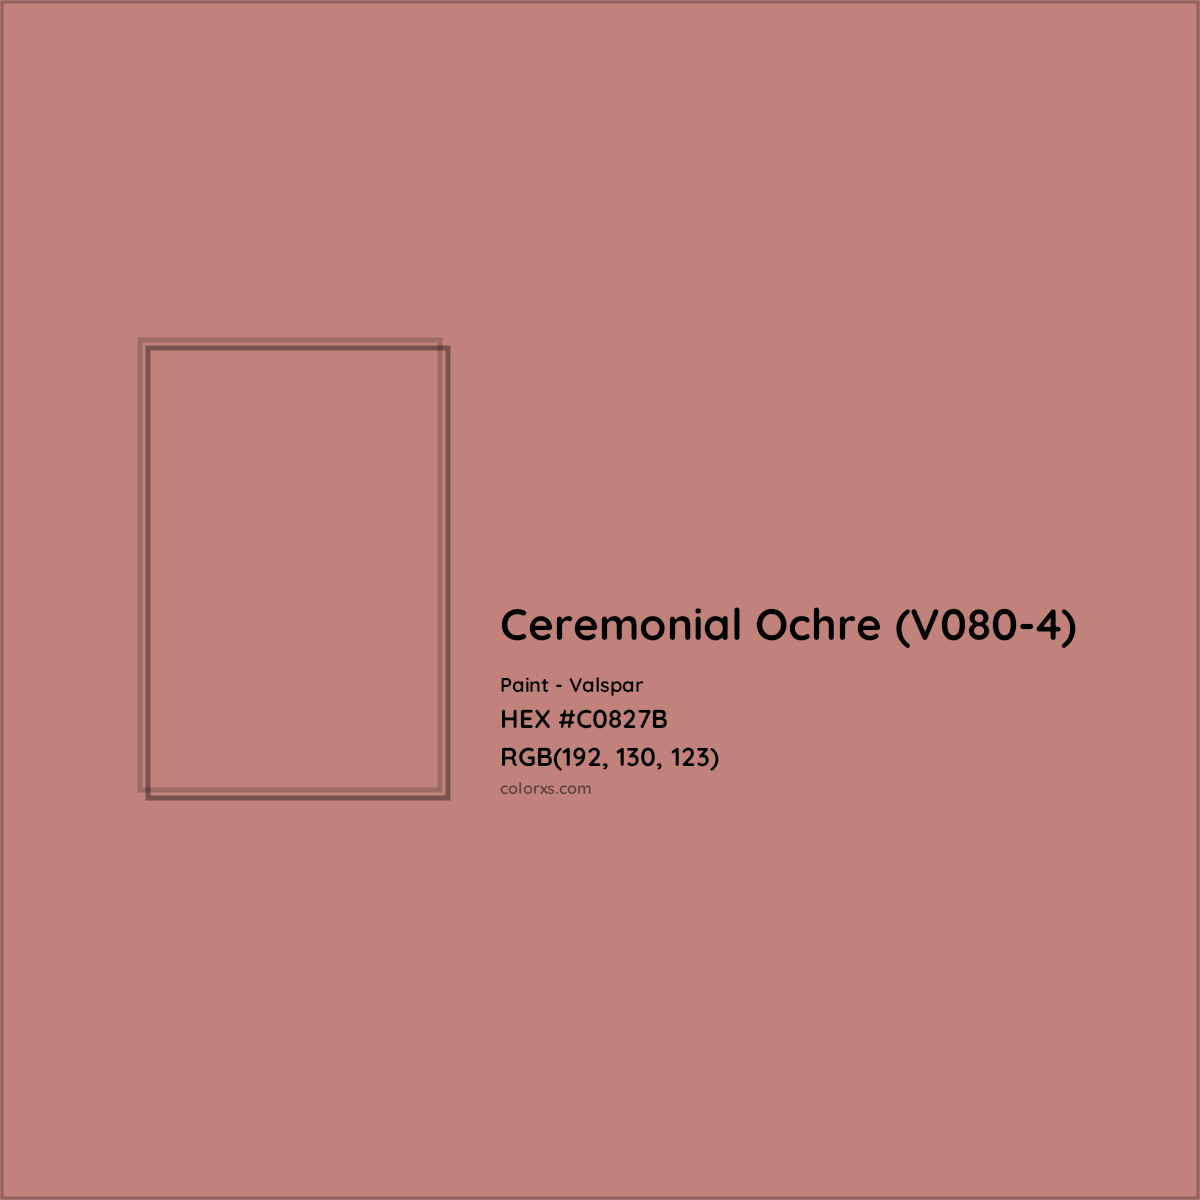 HEX #C0827B Ceremonial Ochre (V080-4) Paint Valspar - Color Code